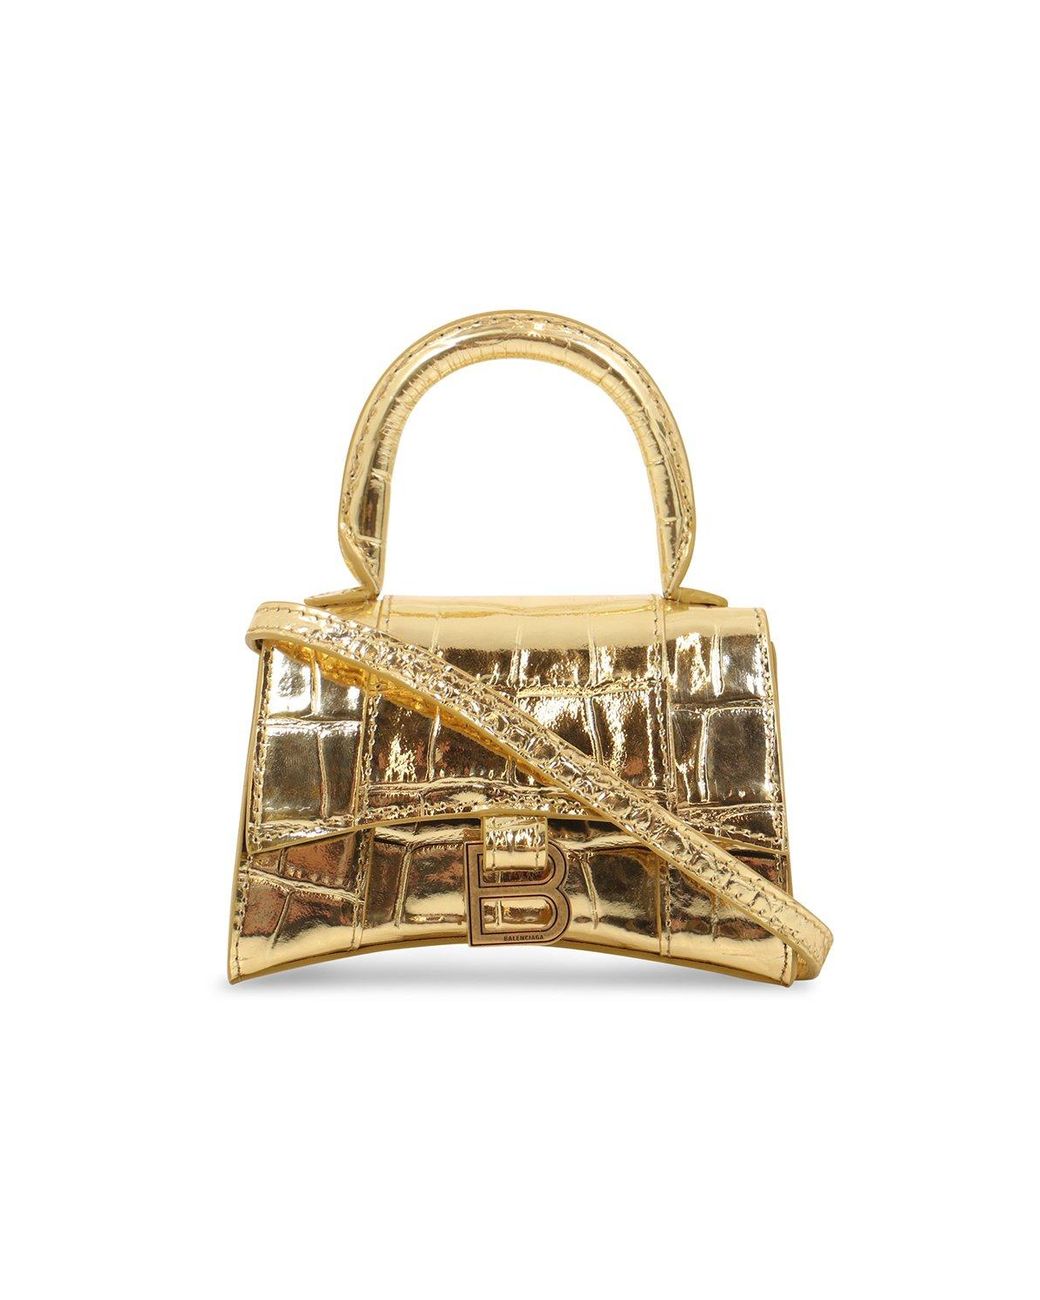 Balenciaga Leather Mini Hourglass Bag Gold Croc Embossed in Metallic - Lyst